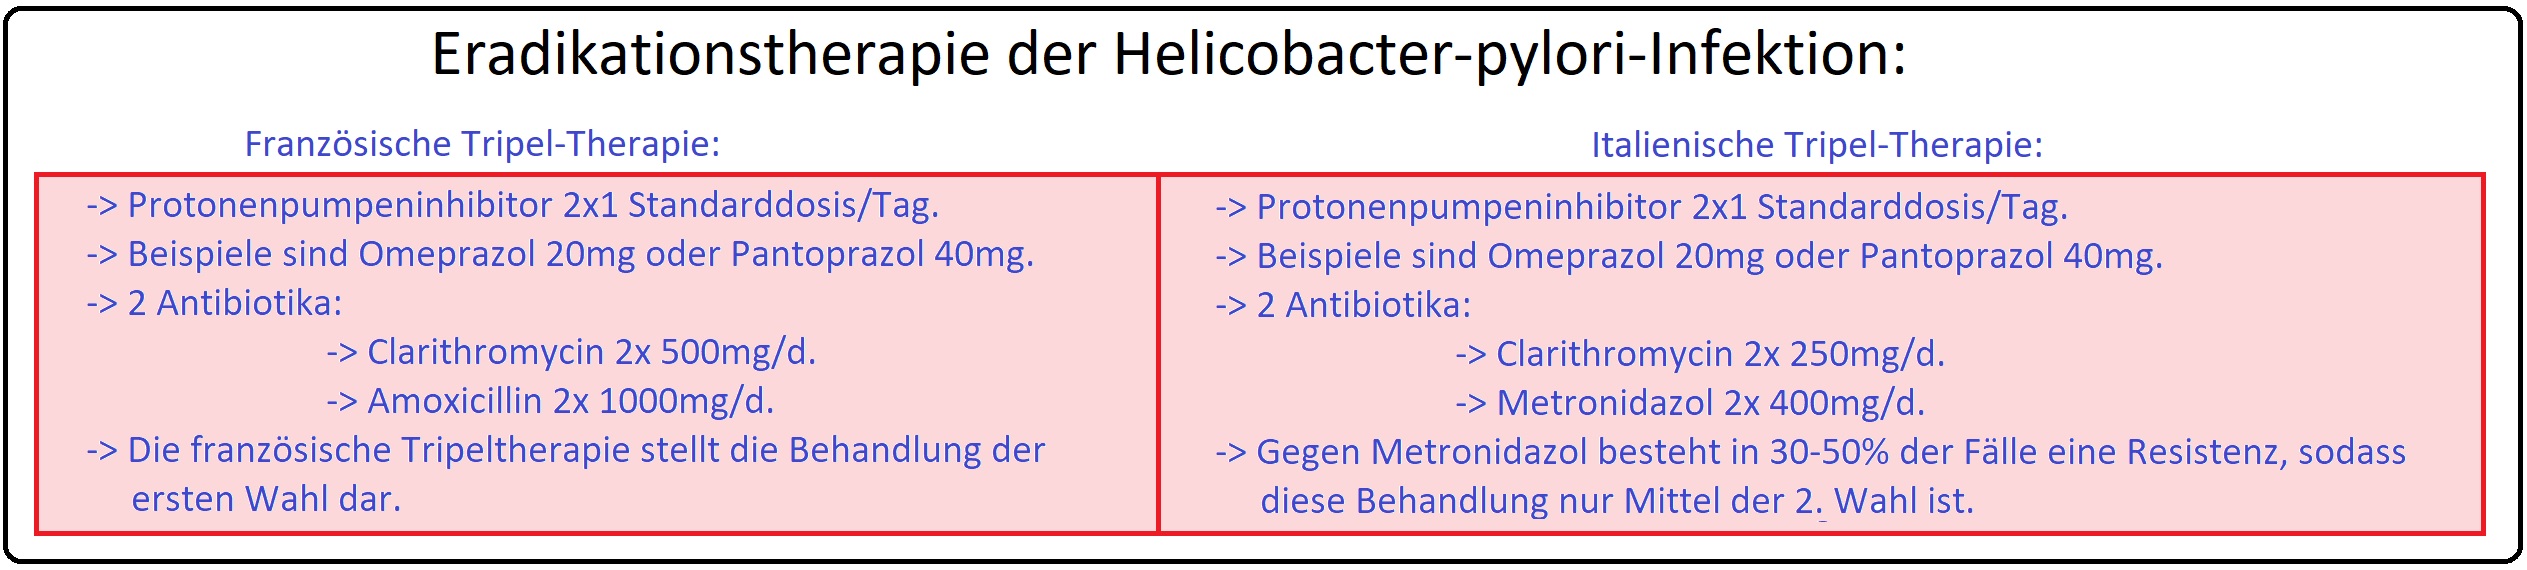 576 Eradikationstherapie der Helicobacter pylori Infektion